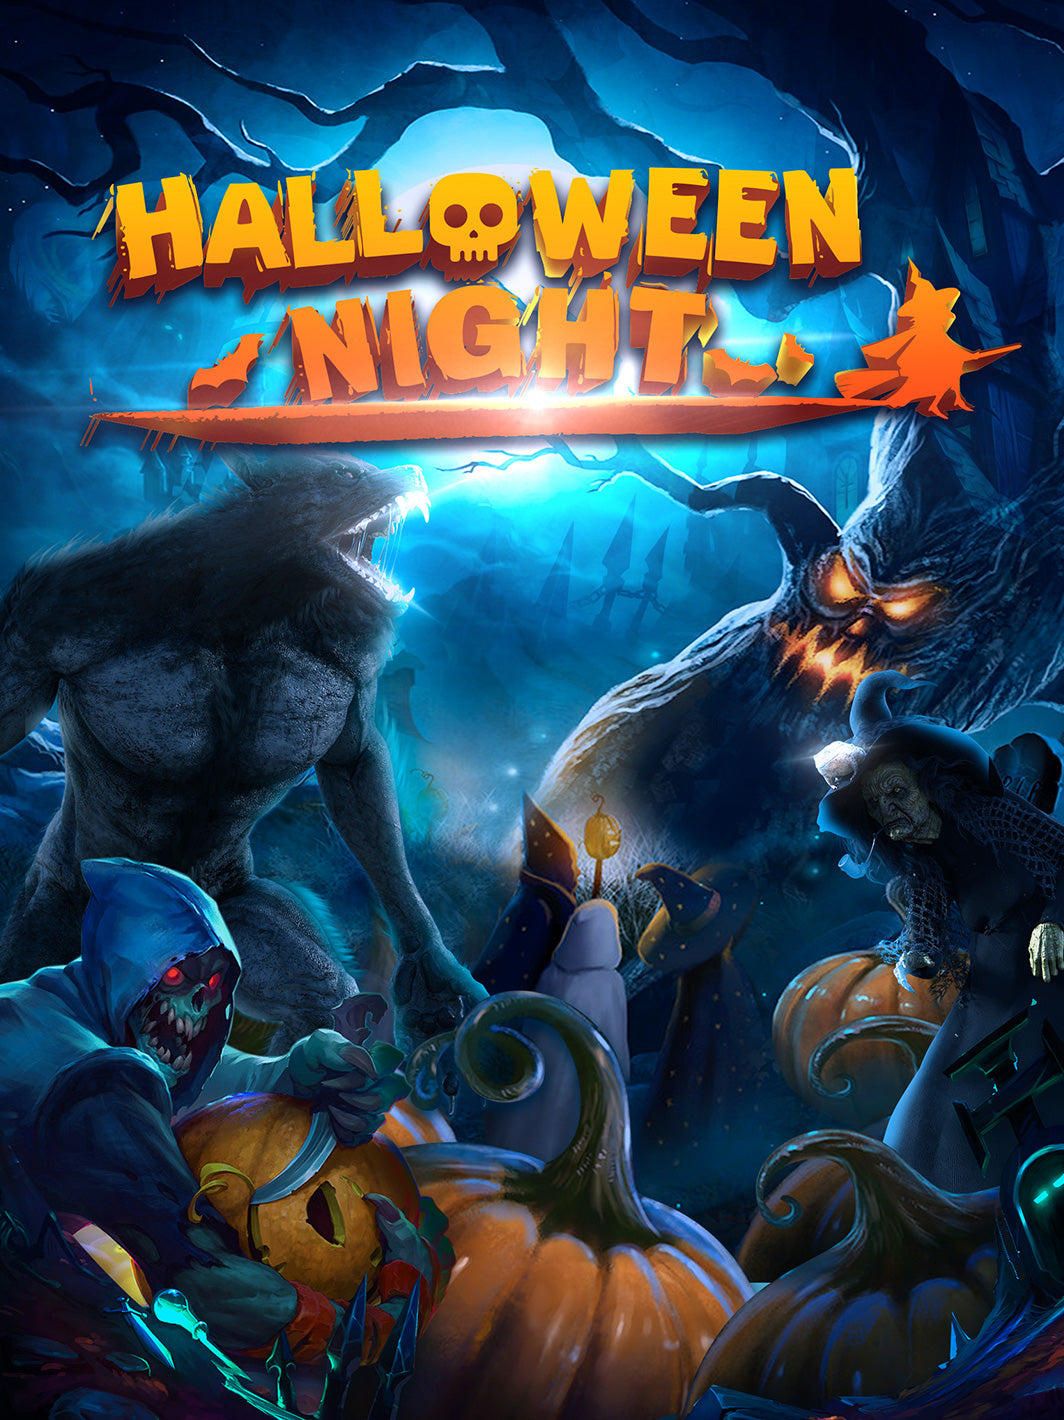 ShallxR VR games - Halloween night